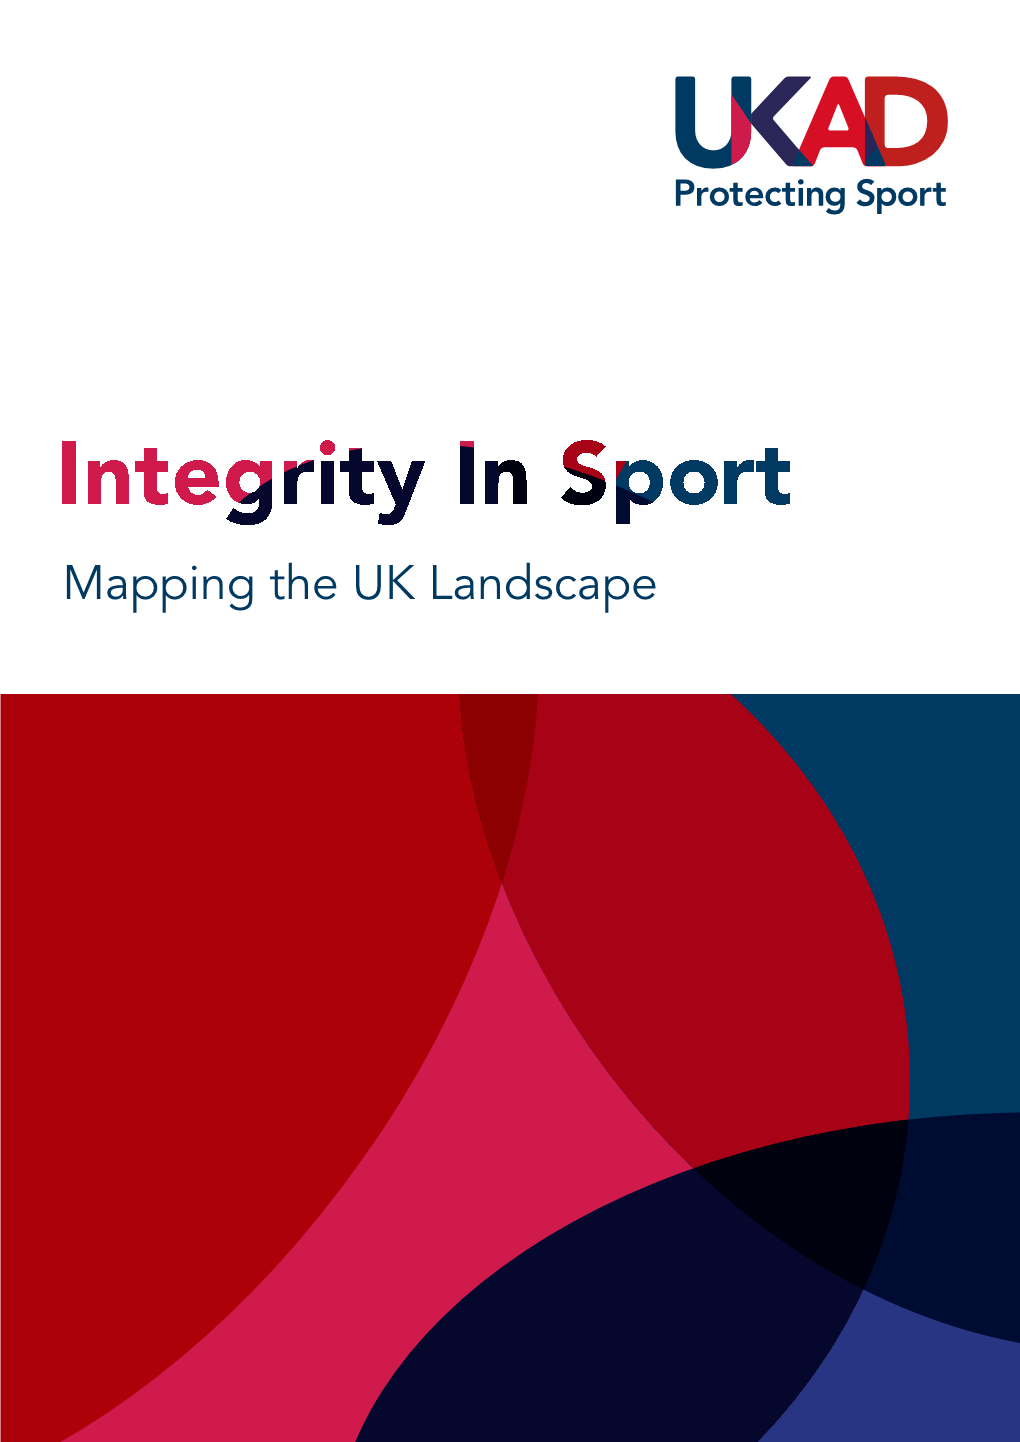 PDF UKAD Integrity in Sport Report 2020